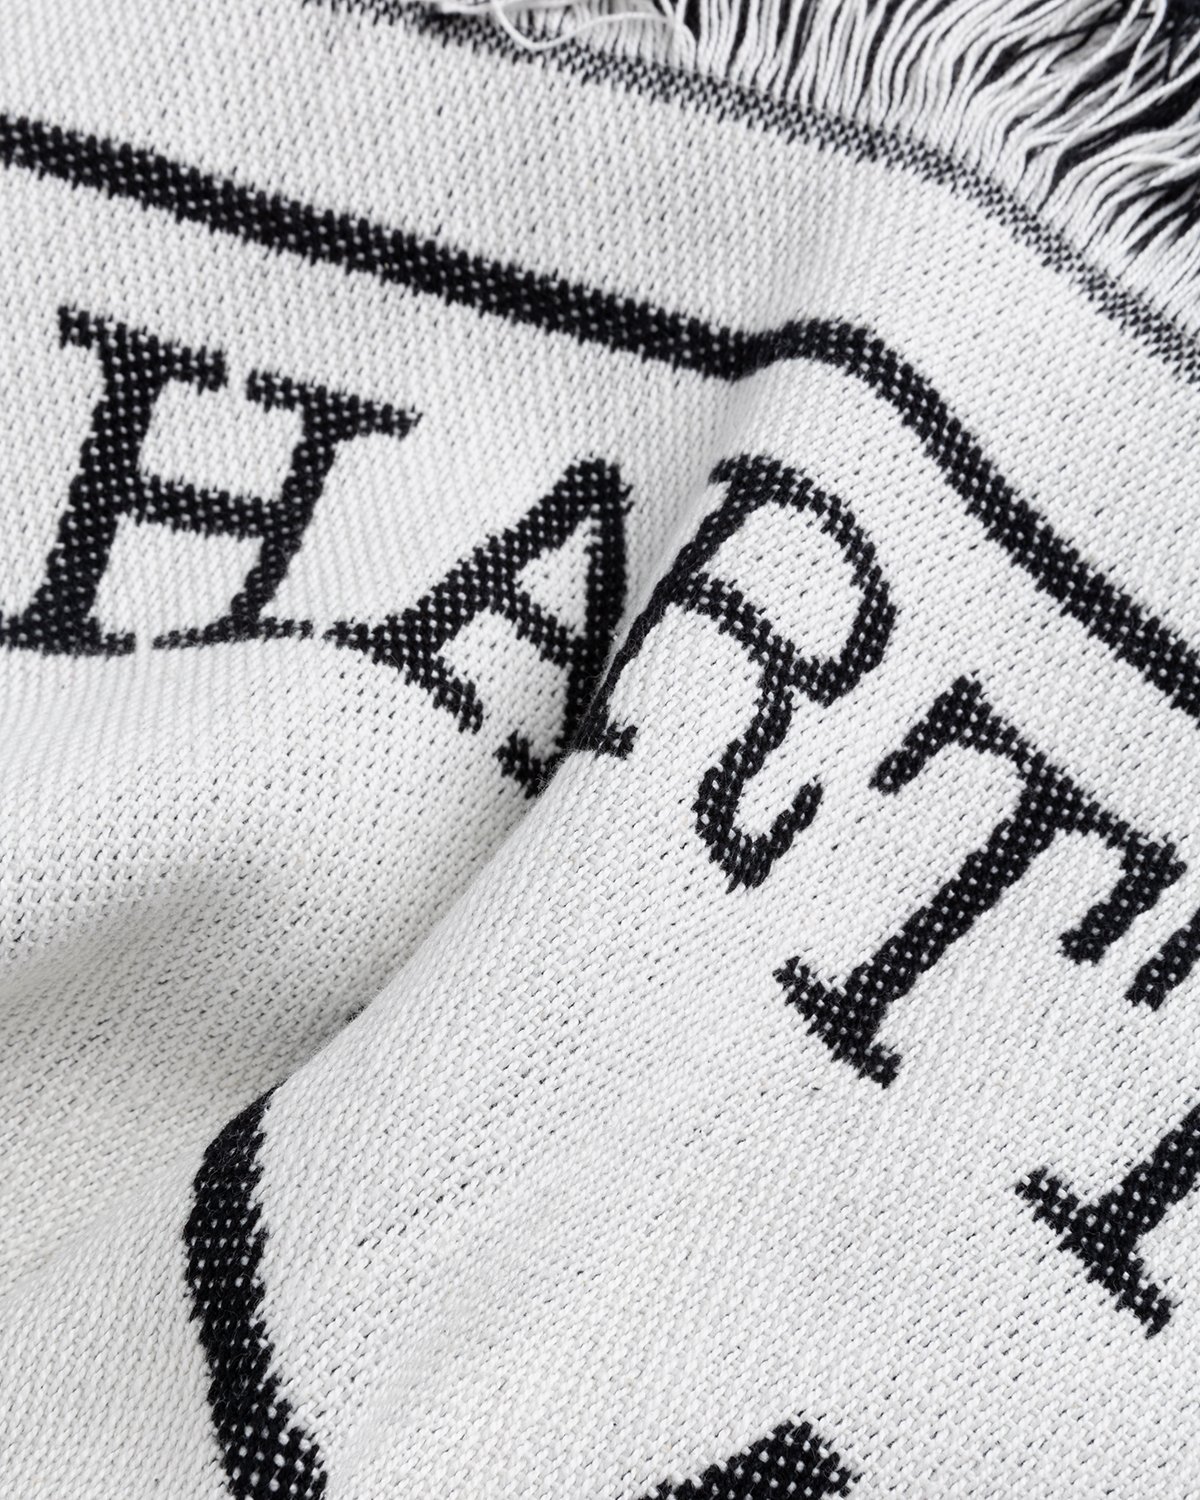 Carhartt WIP - Whisper Woven Blanket Wax Black - Lifestyle - White - Image 6